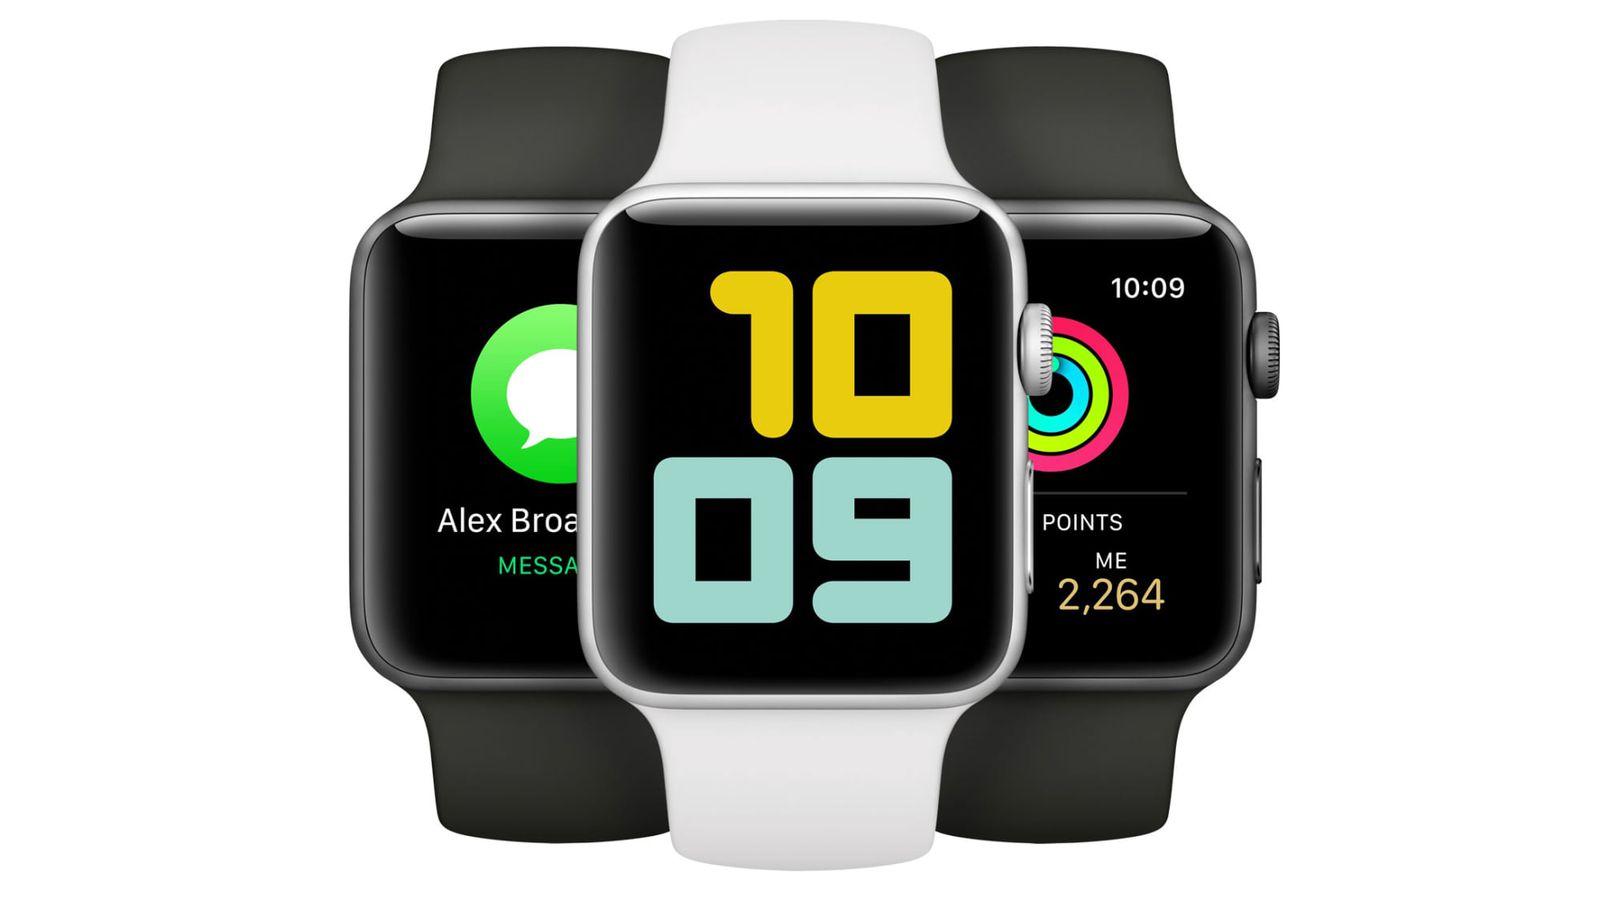 Apple Watch Series 3, Rimosso, Vendita, Apple Store